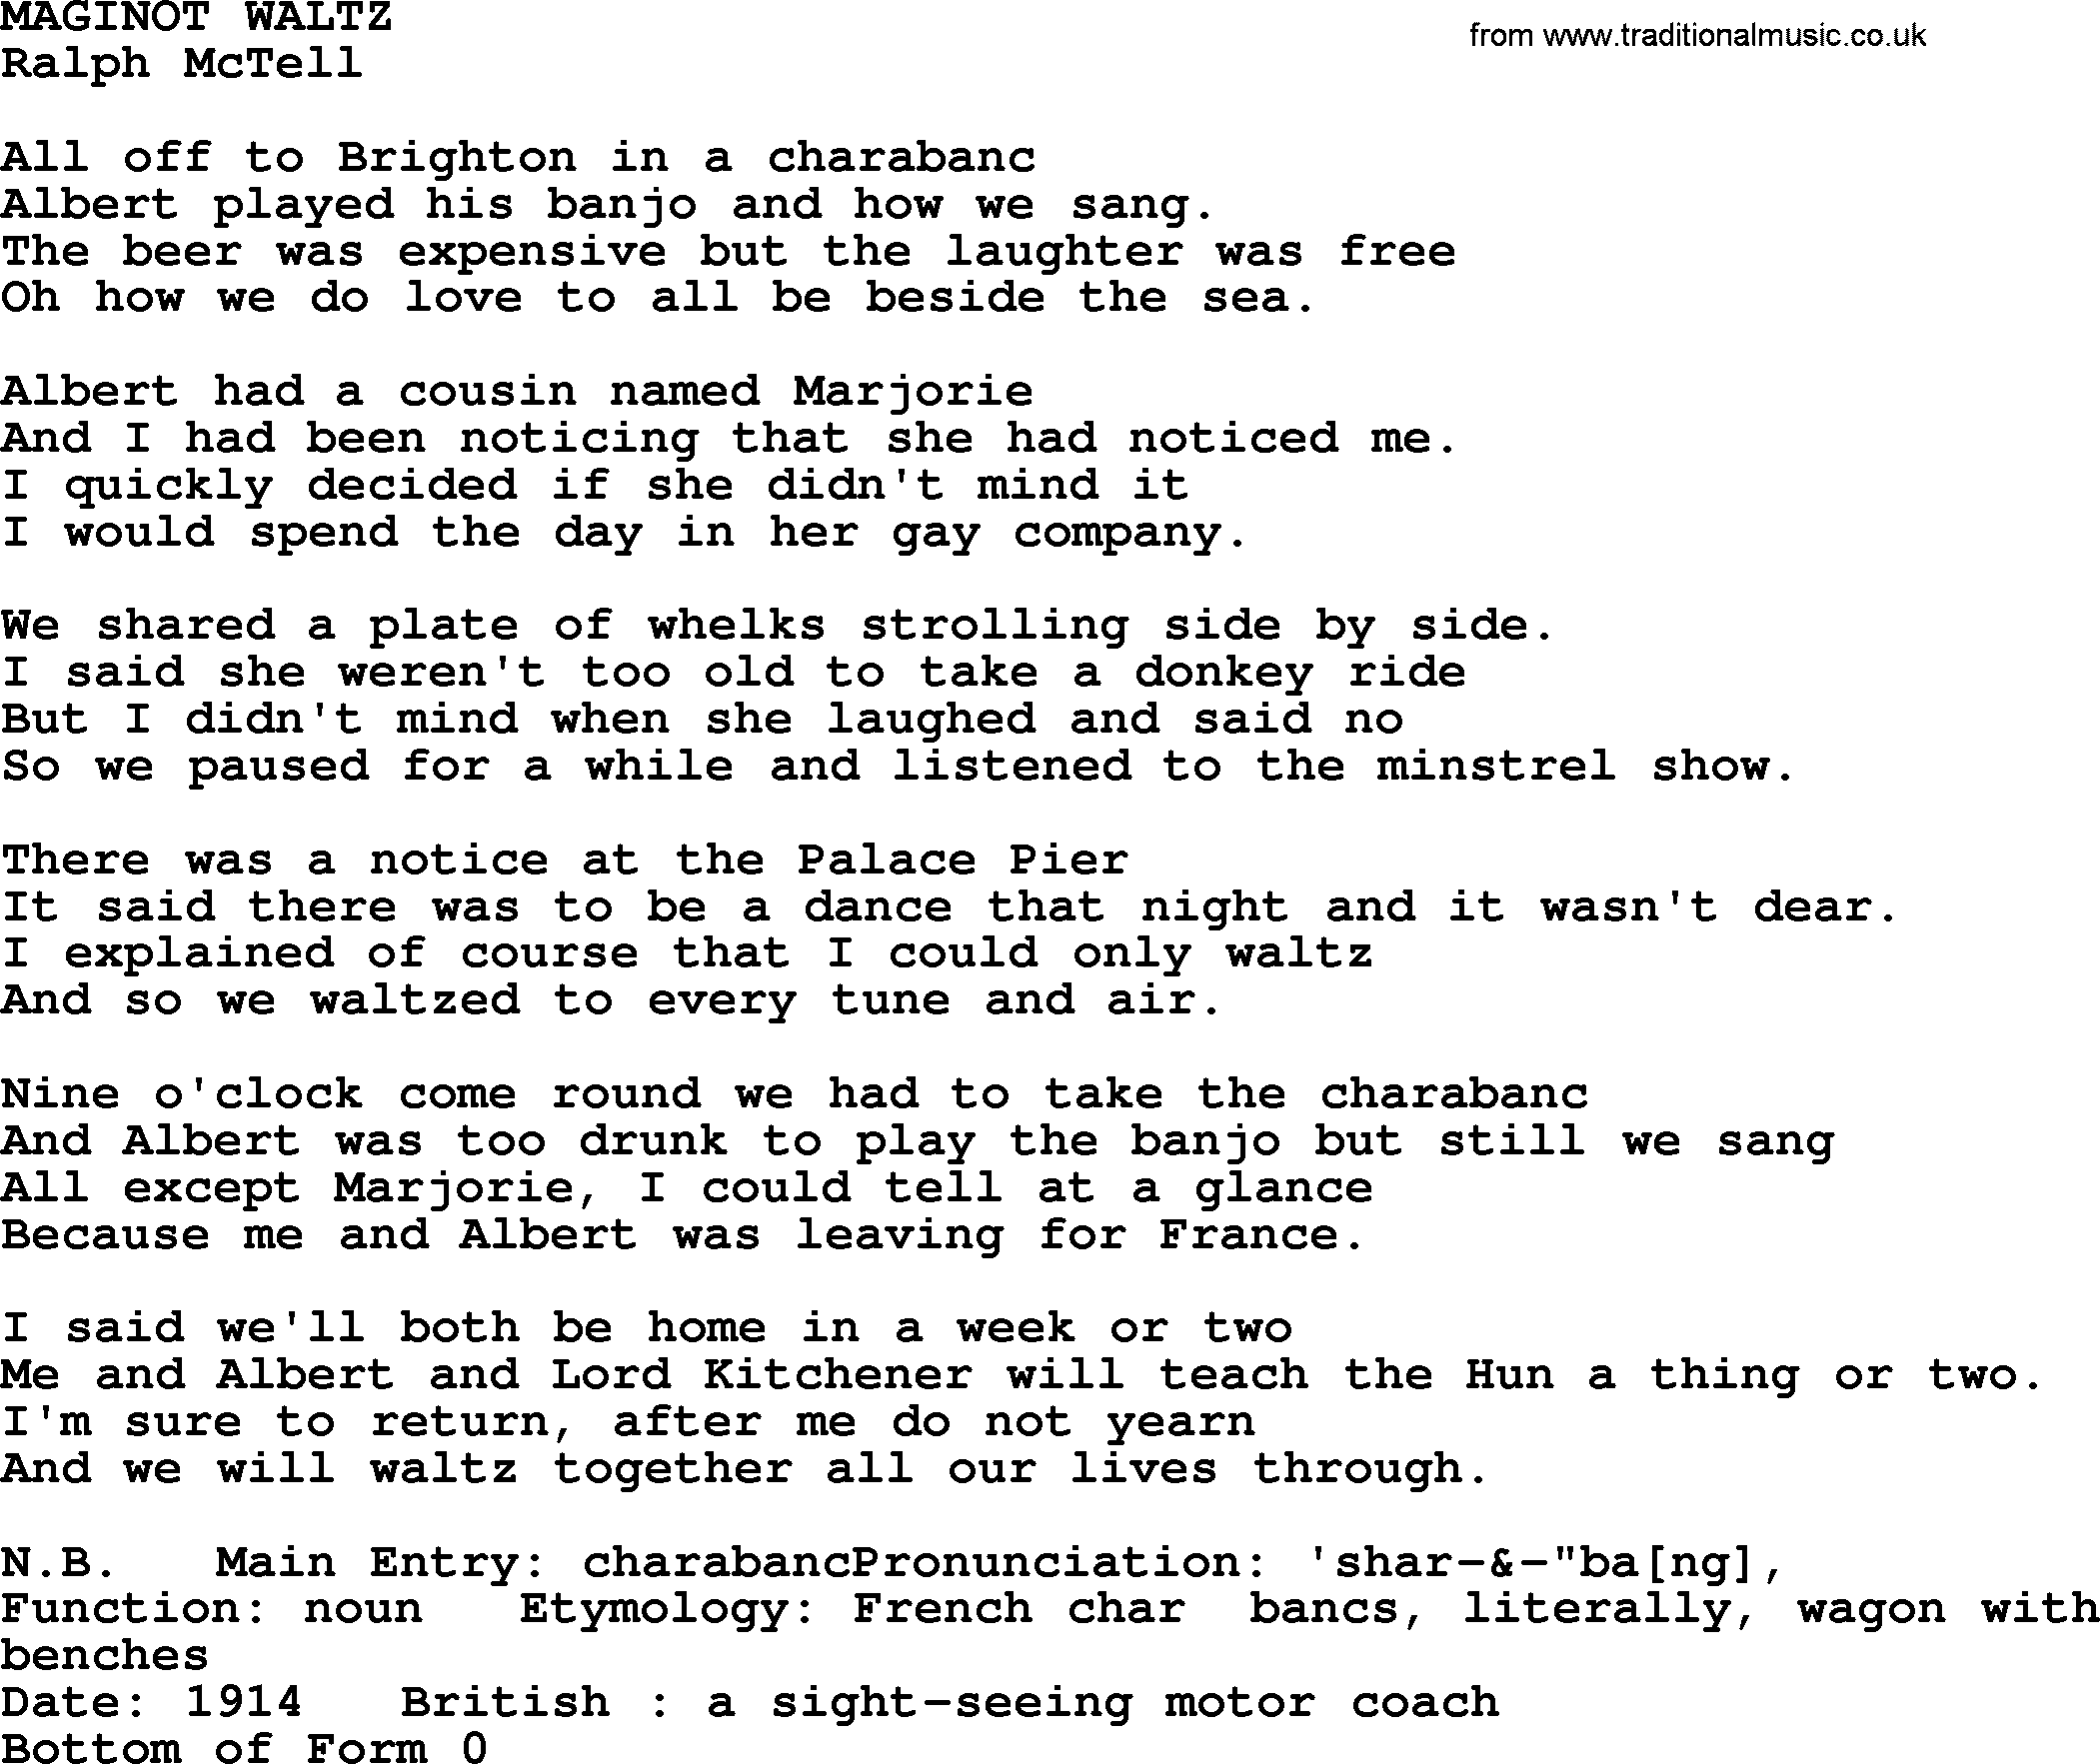 Ralph McTell Song: Maginot Waltz, lyrics